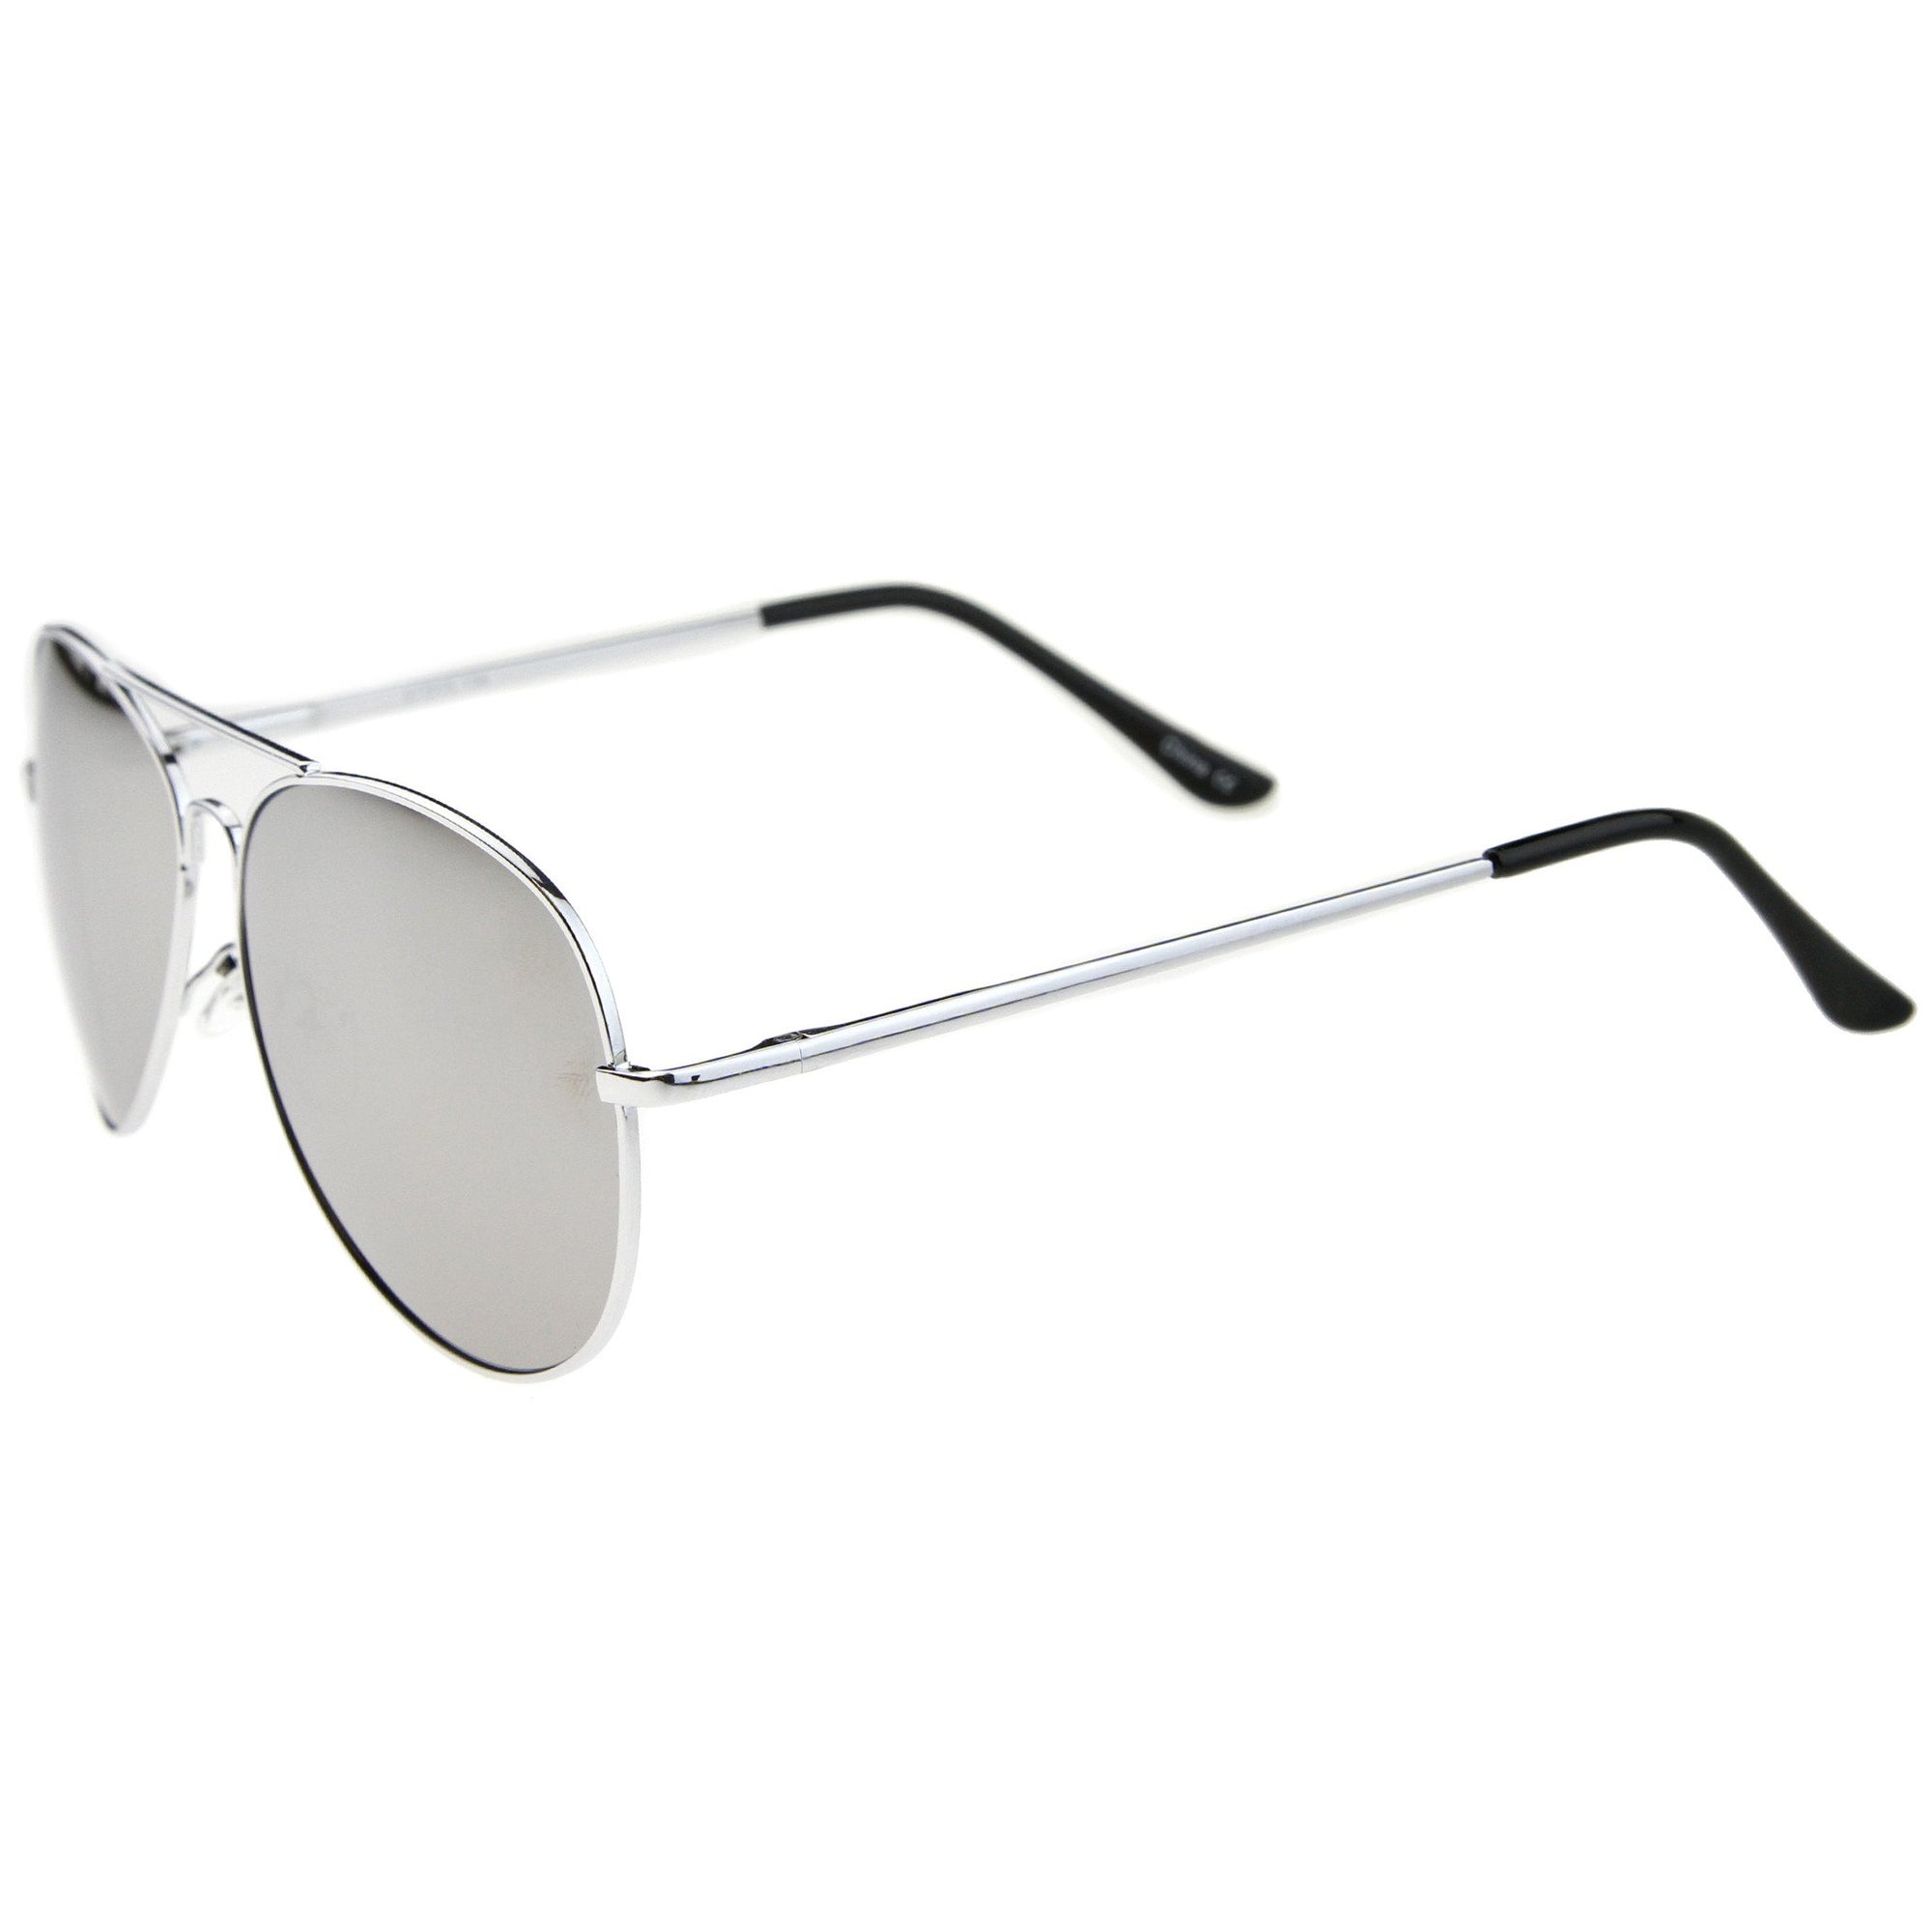  Big Mo's Toys Silver Mirrored Aviator Sunglasses